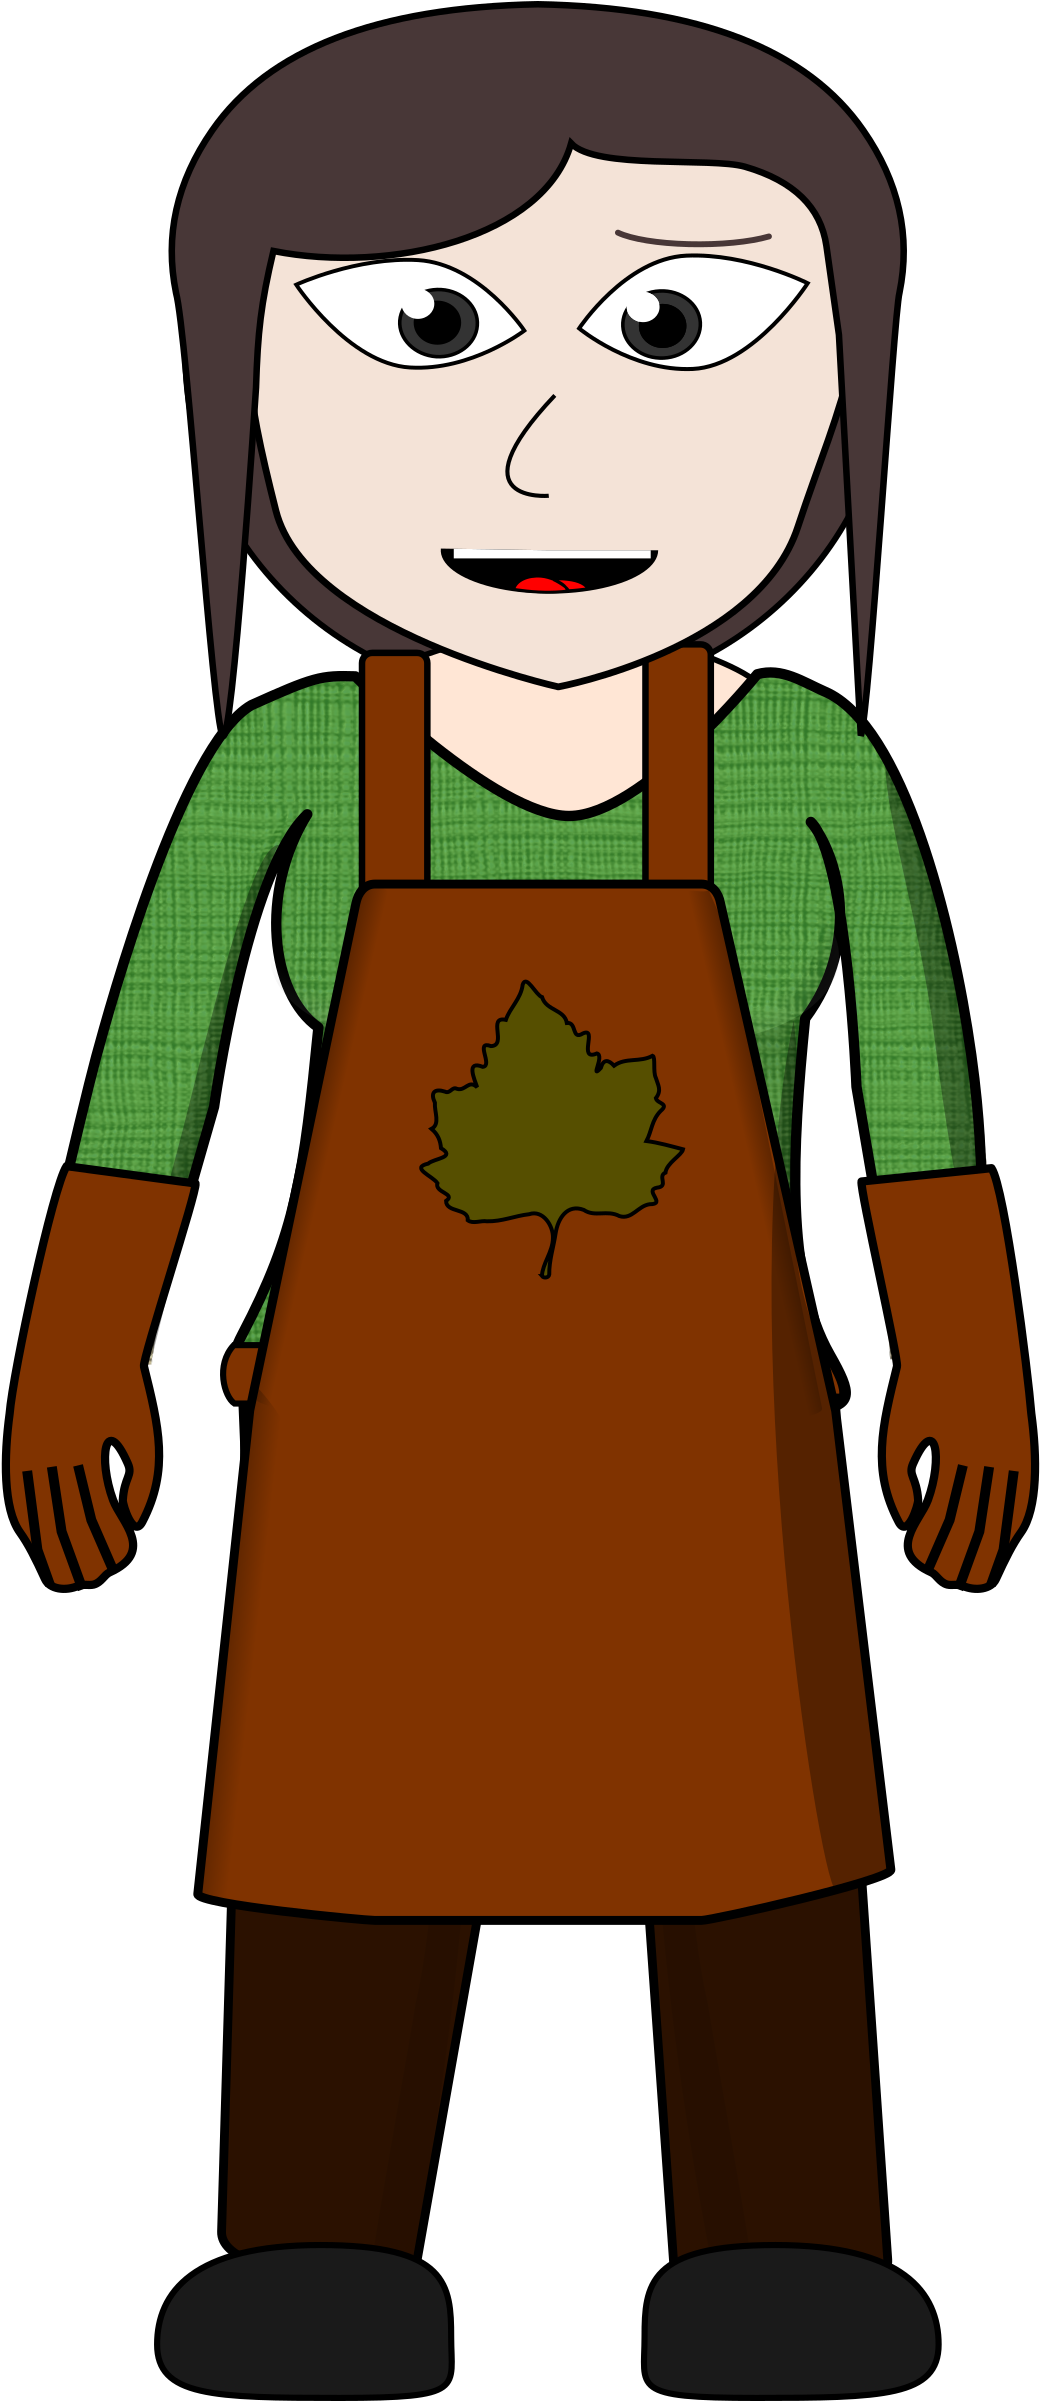 Cartoon A Cartoon Of A Woman Wearing An Apron